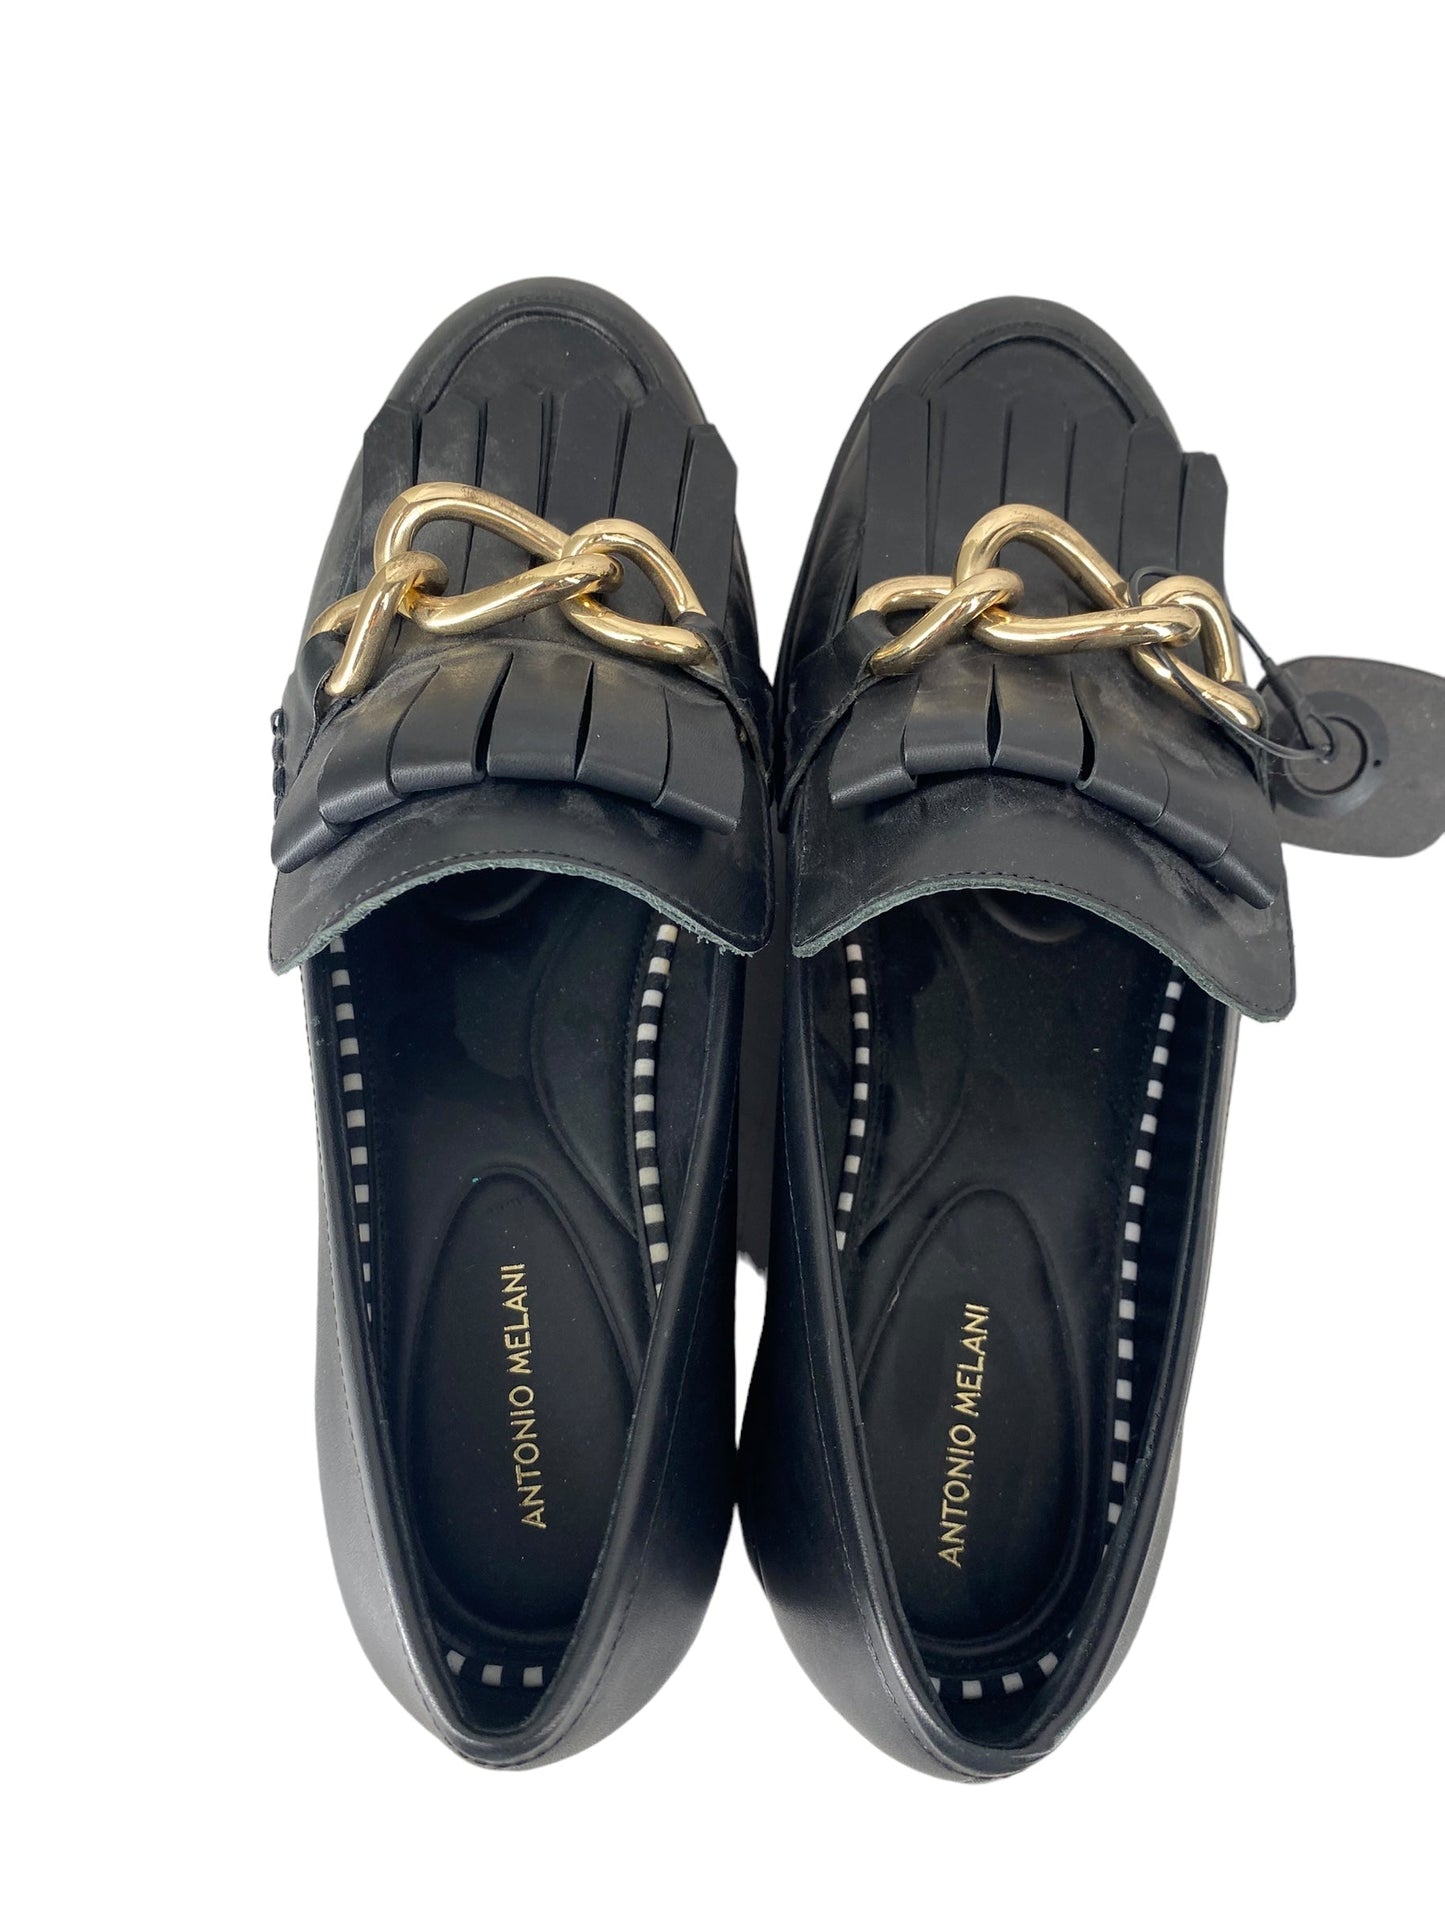 Black Shoes Flats Antonio Melani, Size 10